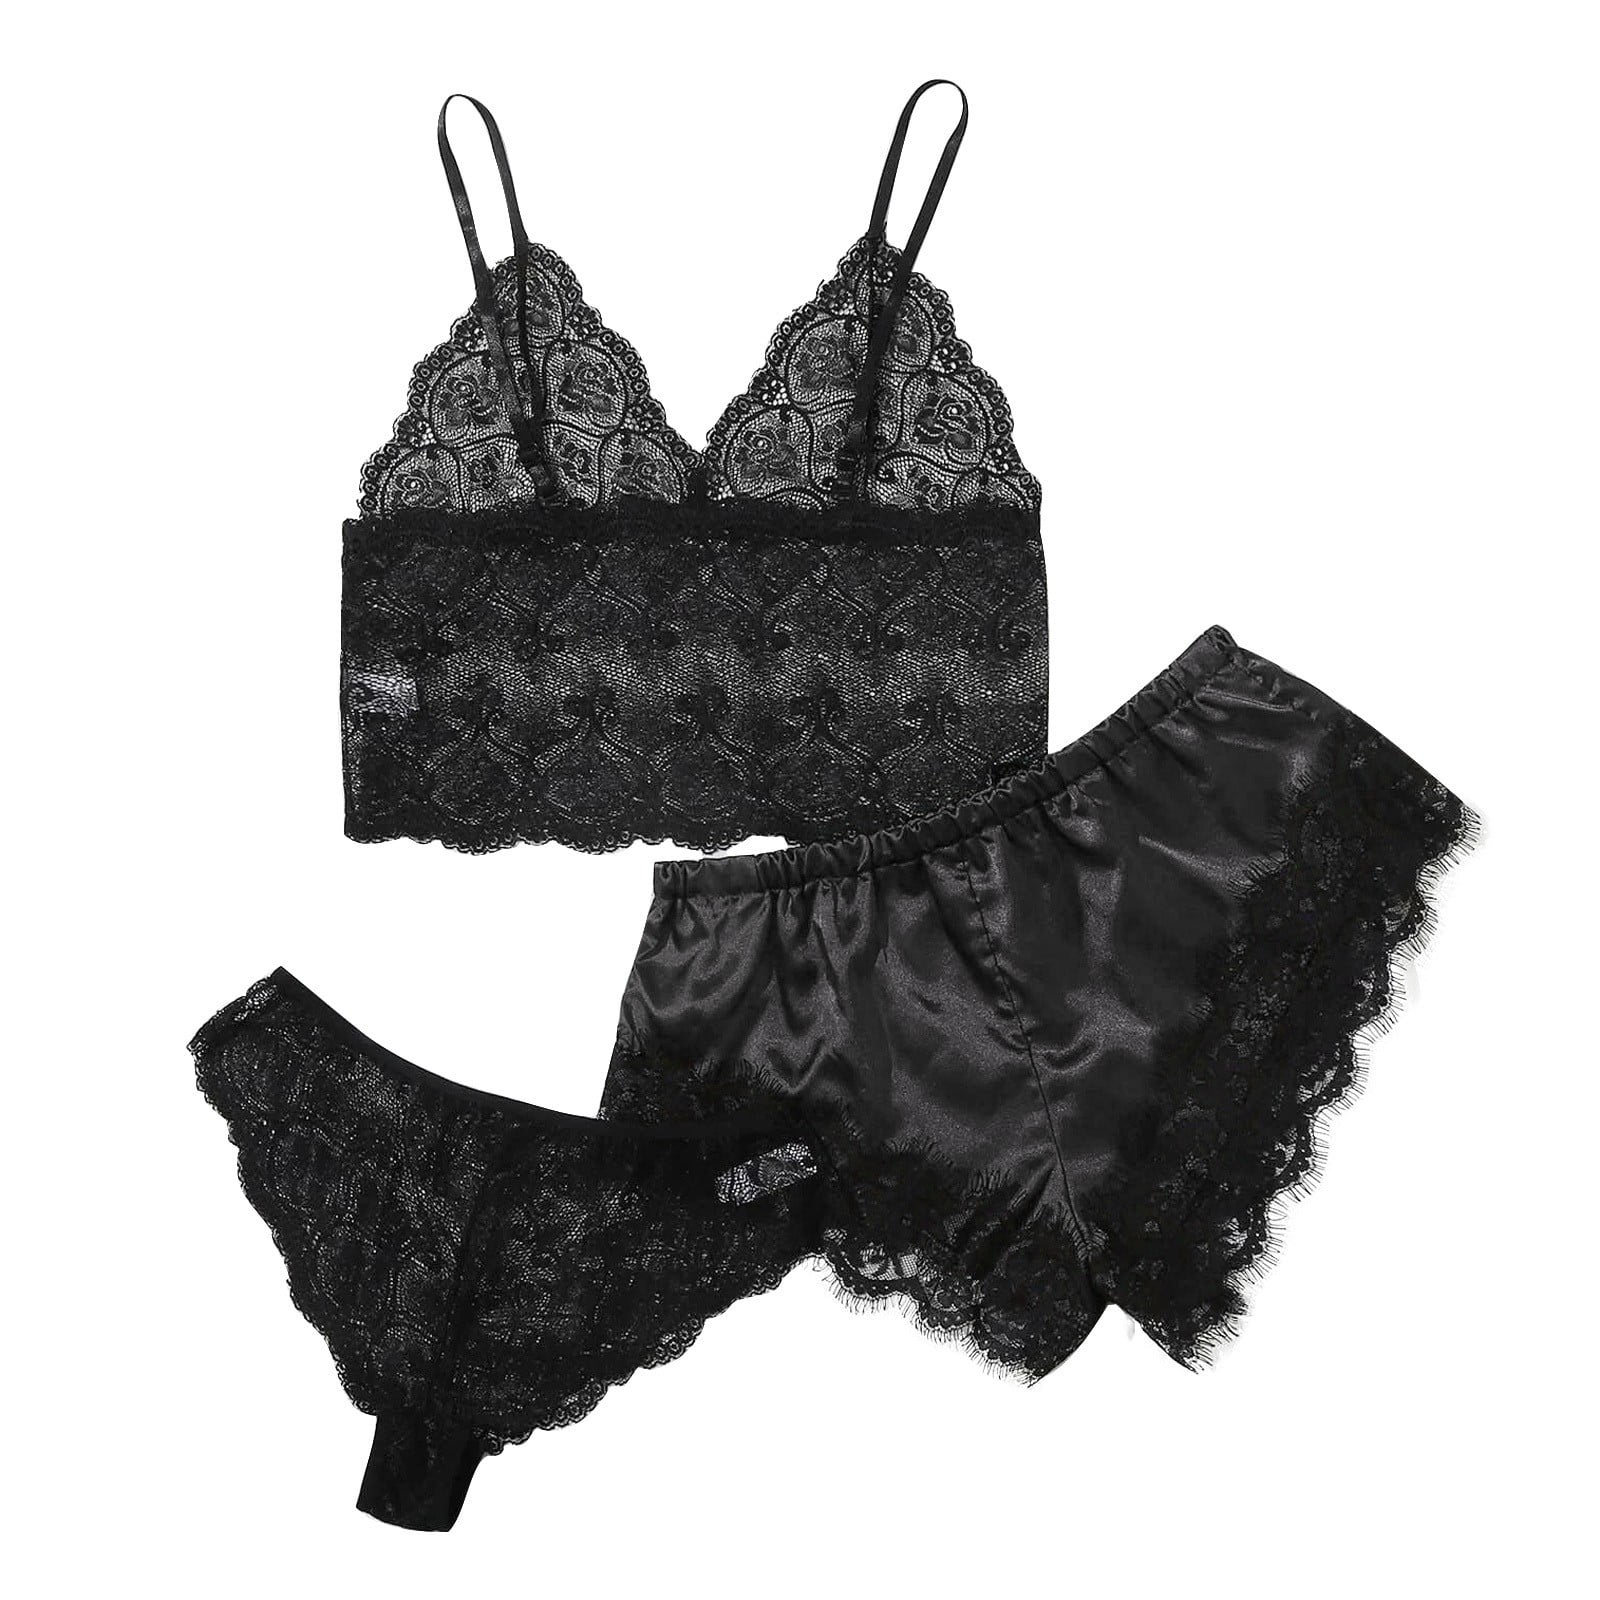 Eashery Lingerie Sets for Women Push Up Lace Sleepwear Ladies Pajamas Black  XL 